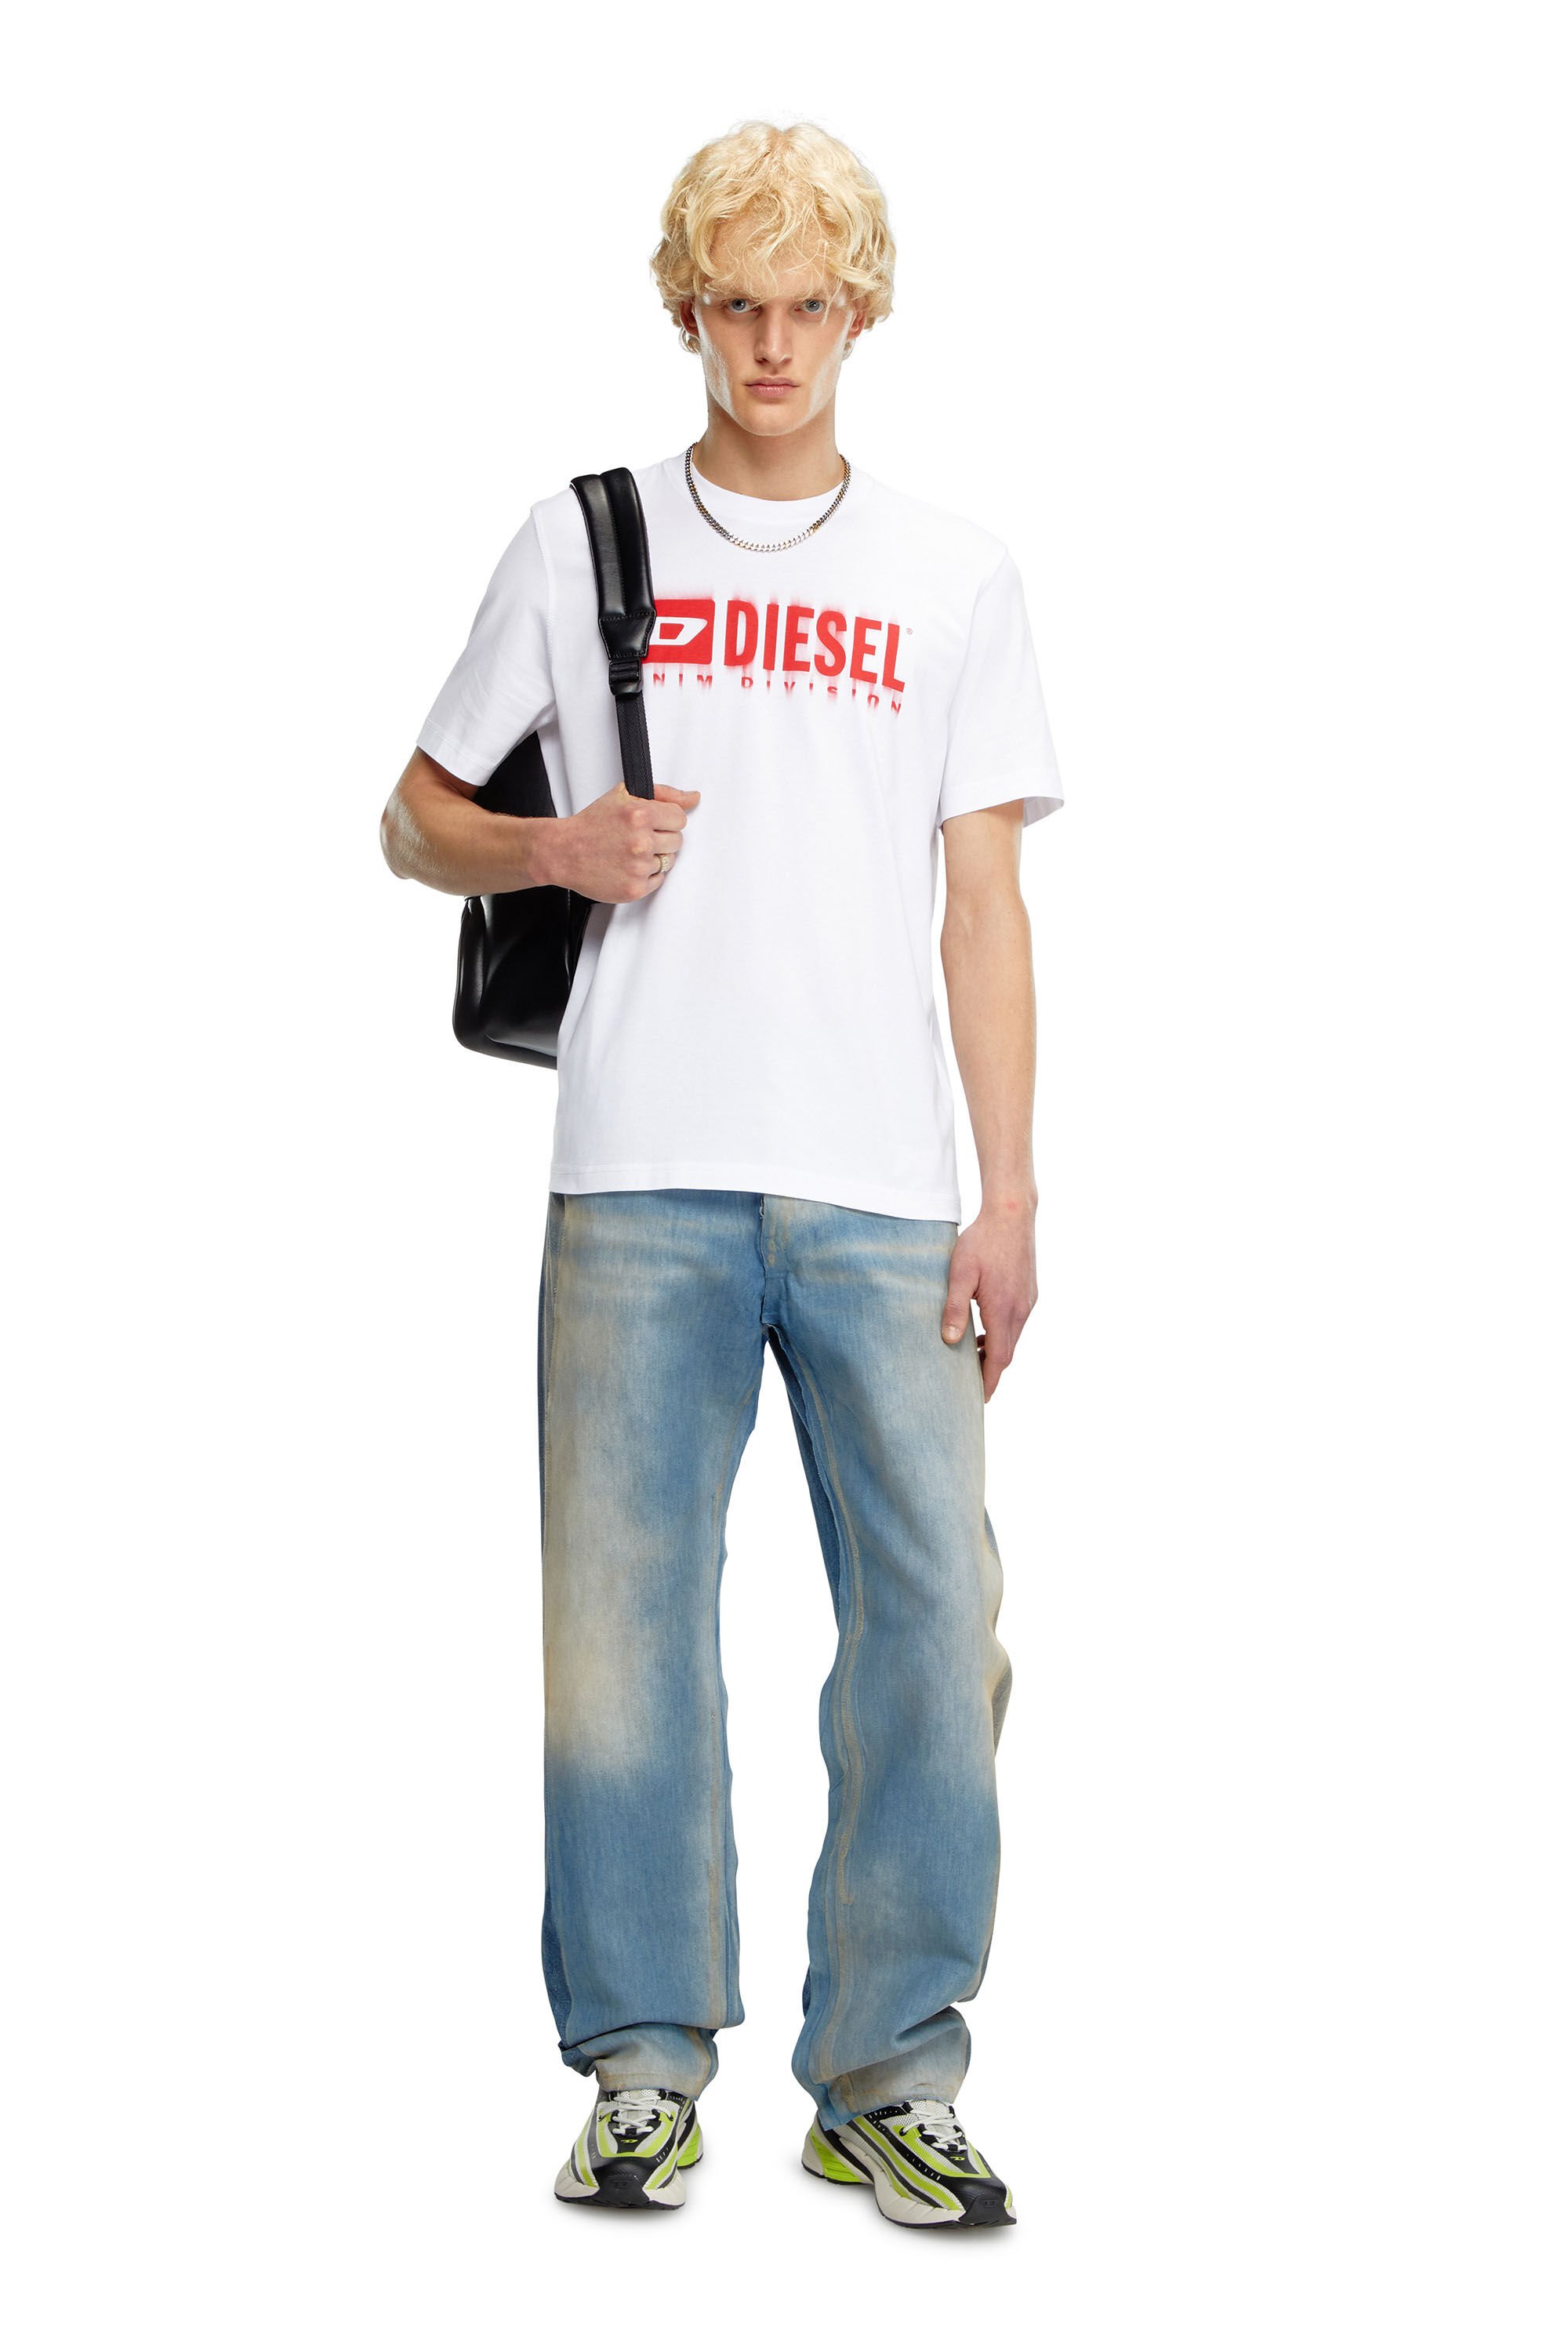 Diesel - T-ADJUST-Q7, Hombre Camiseta con logotipo Diesel borroso in Blanco - Image 1